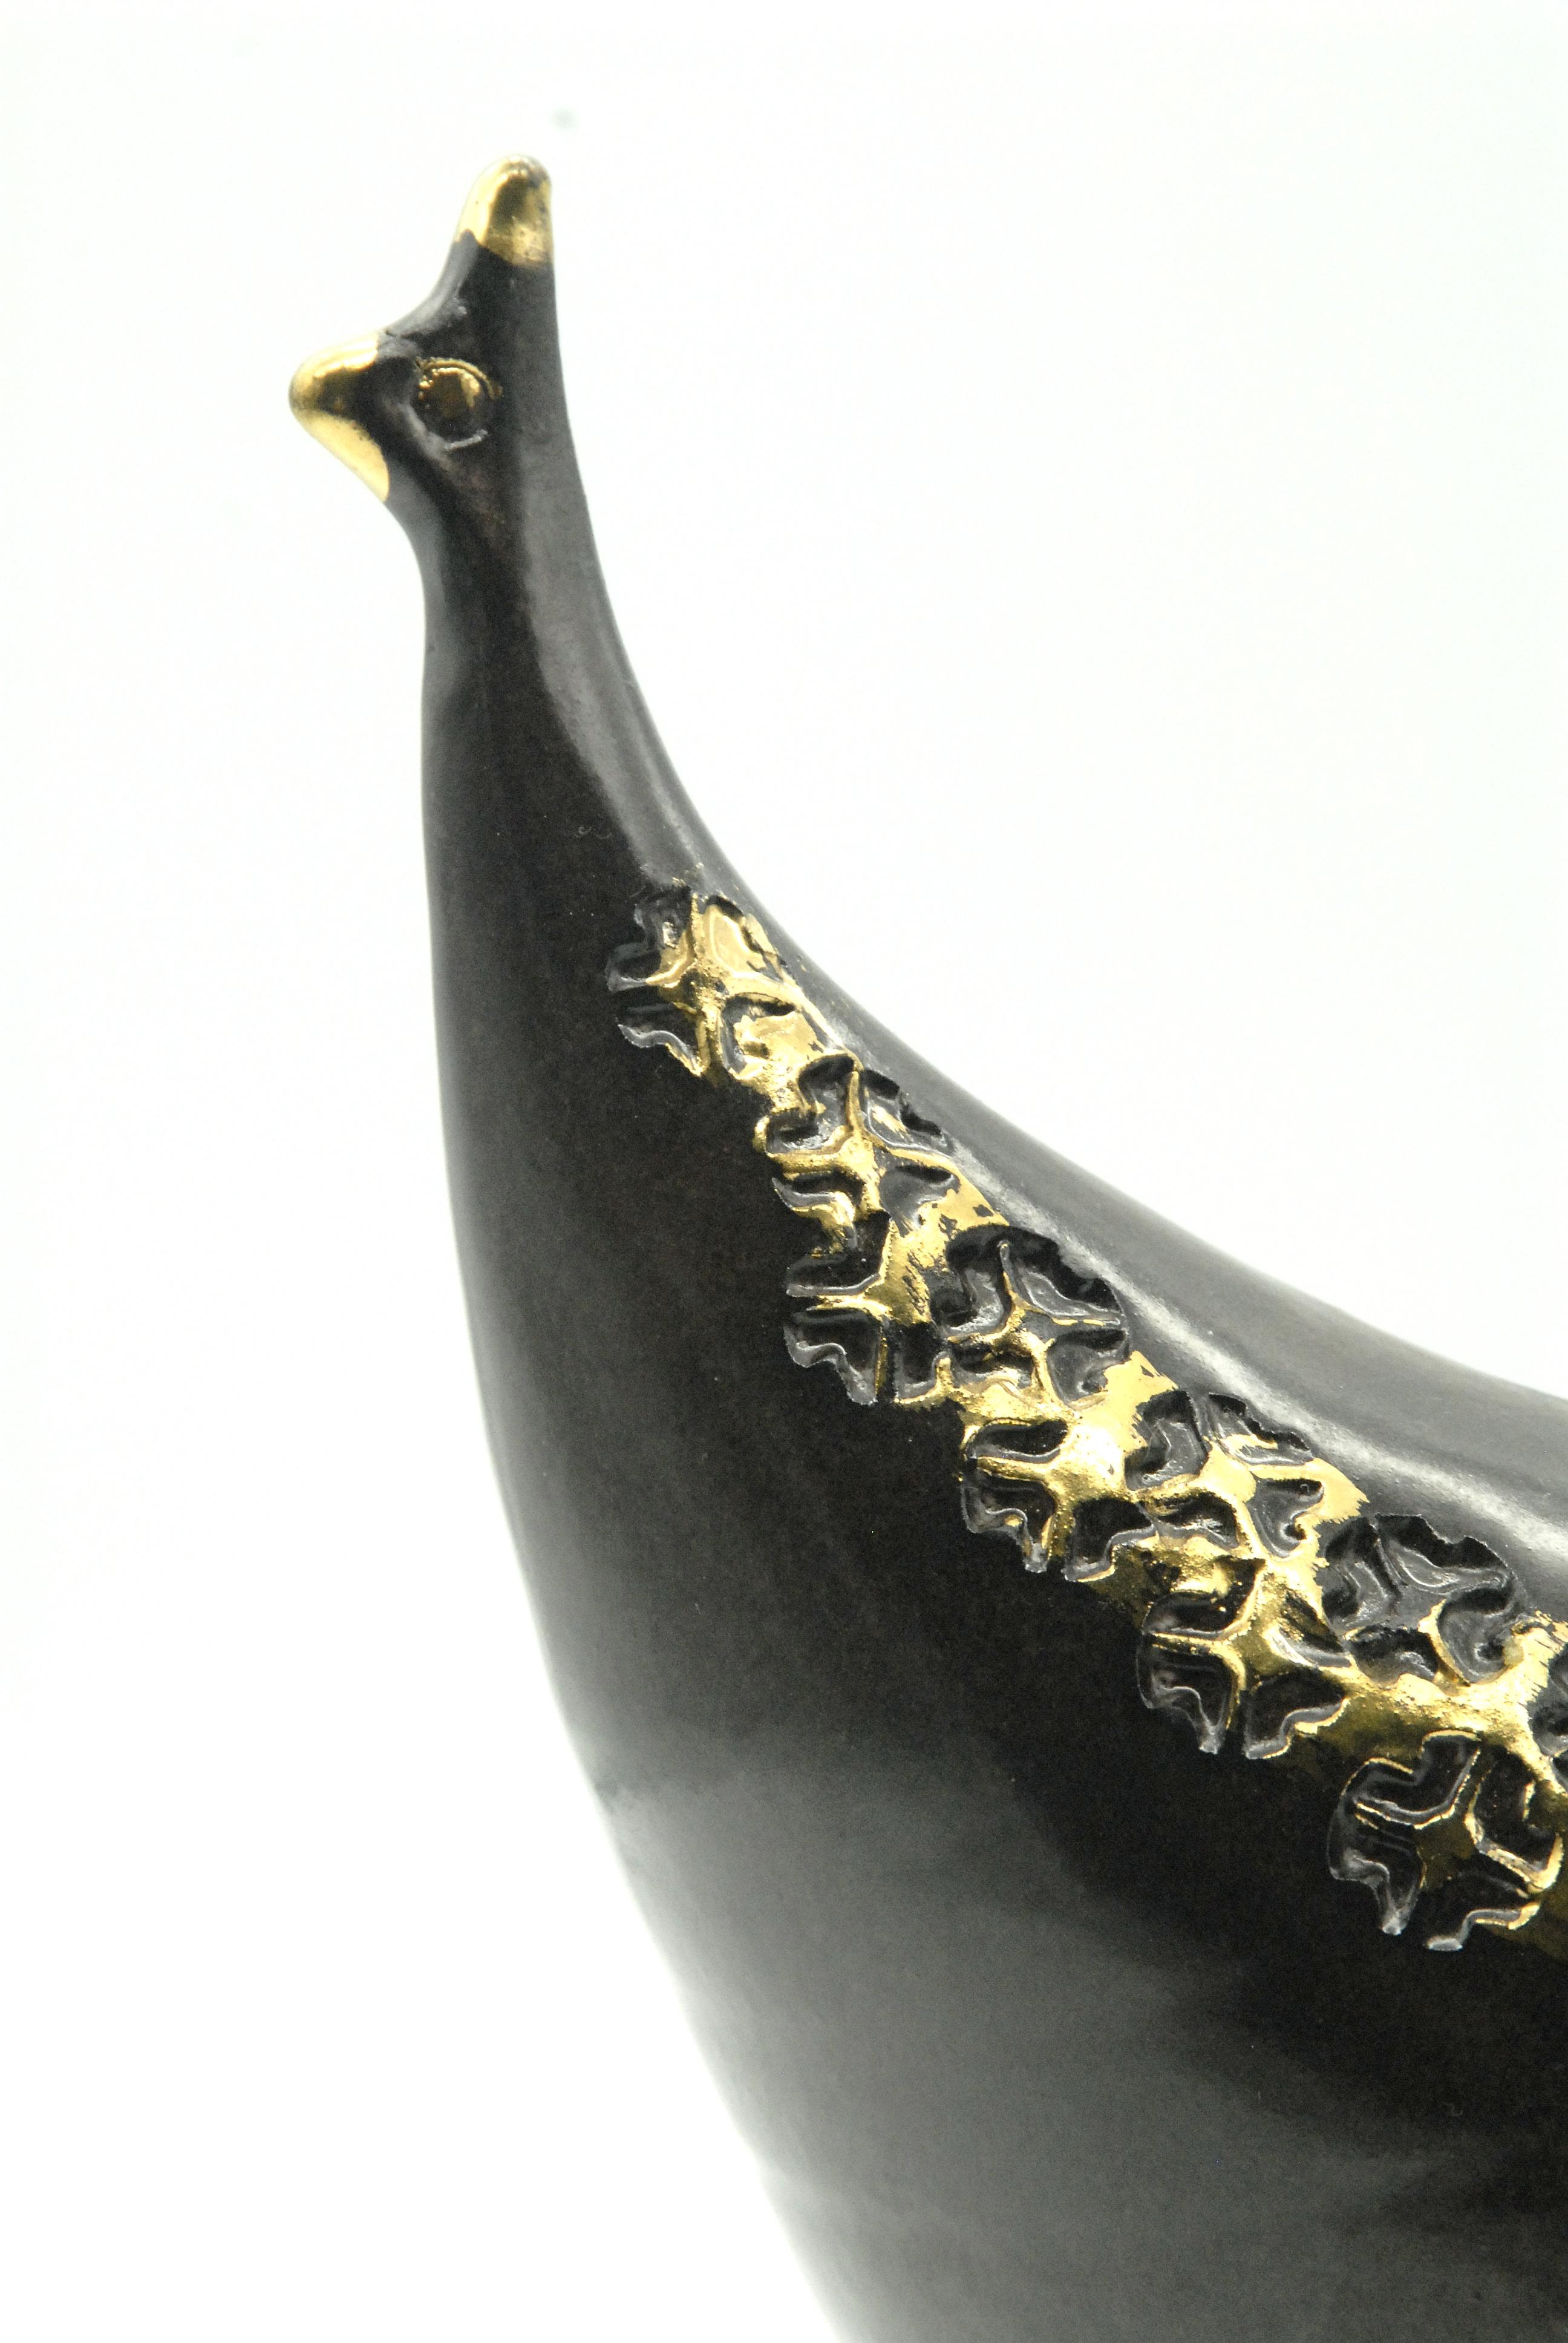 Mid-Century Modern Bitossi Aldo Londi Bird Vase, Italy, circa 1968